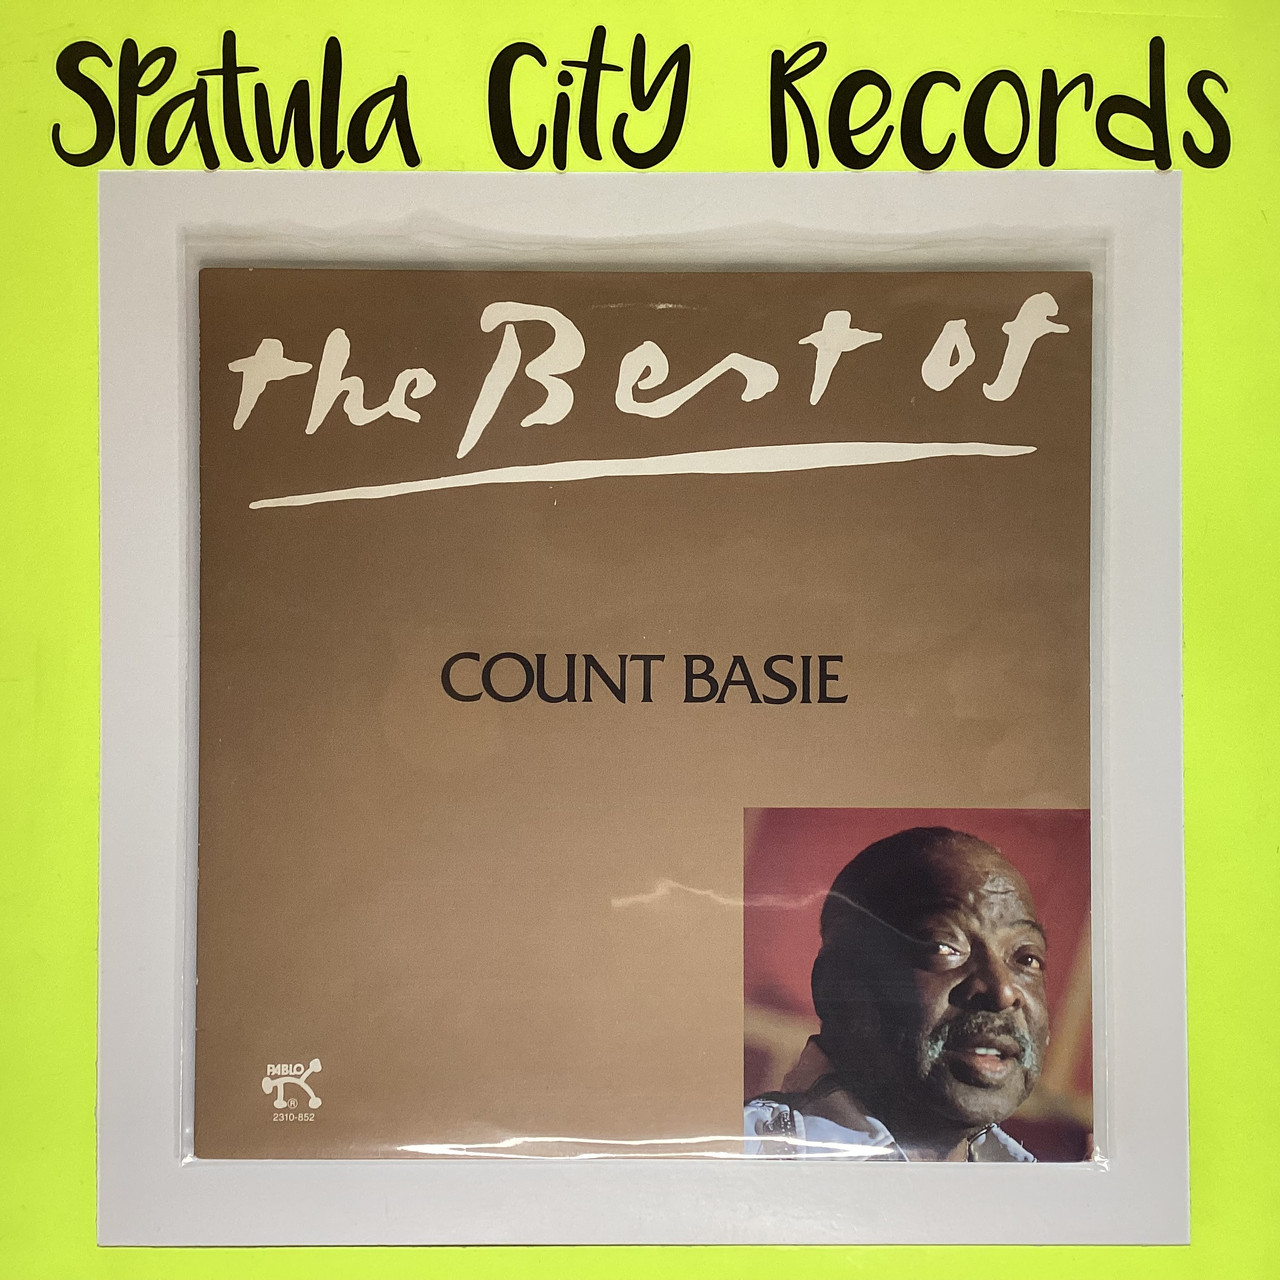 Count Basie - The Best of Count Basie - CLUB COPY - vinyl record album LP